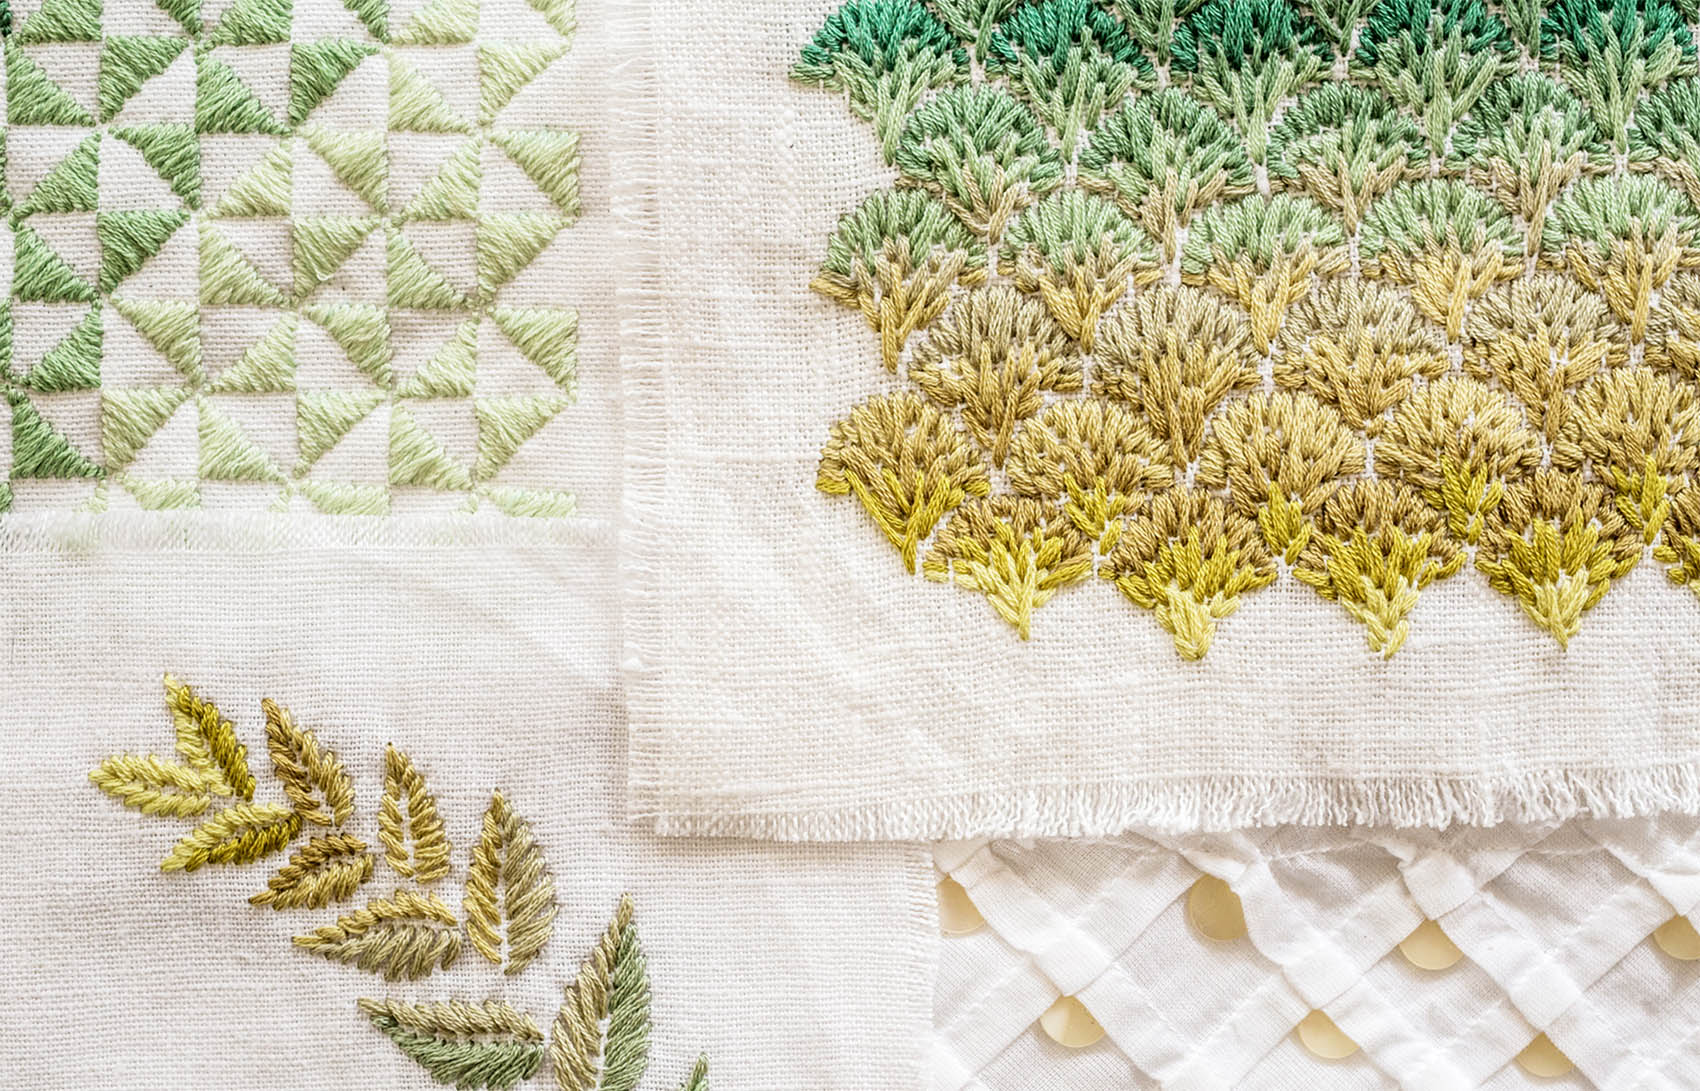 beautiful embroidery patterns from sarah laskow designs | via @victoriamstudio